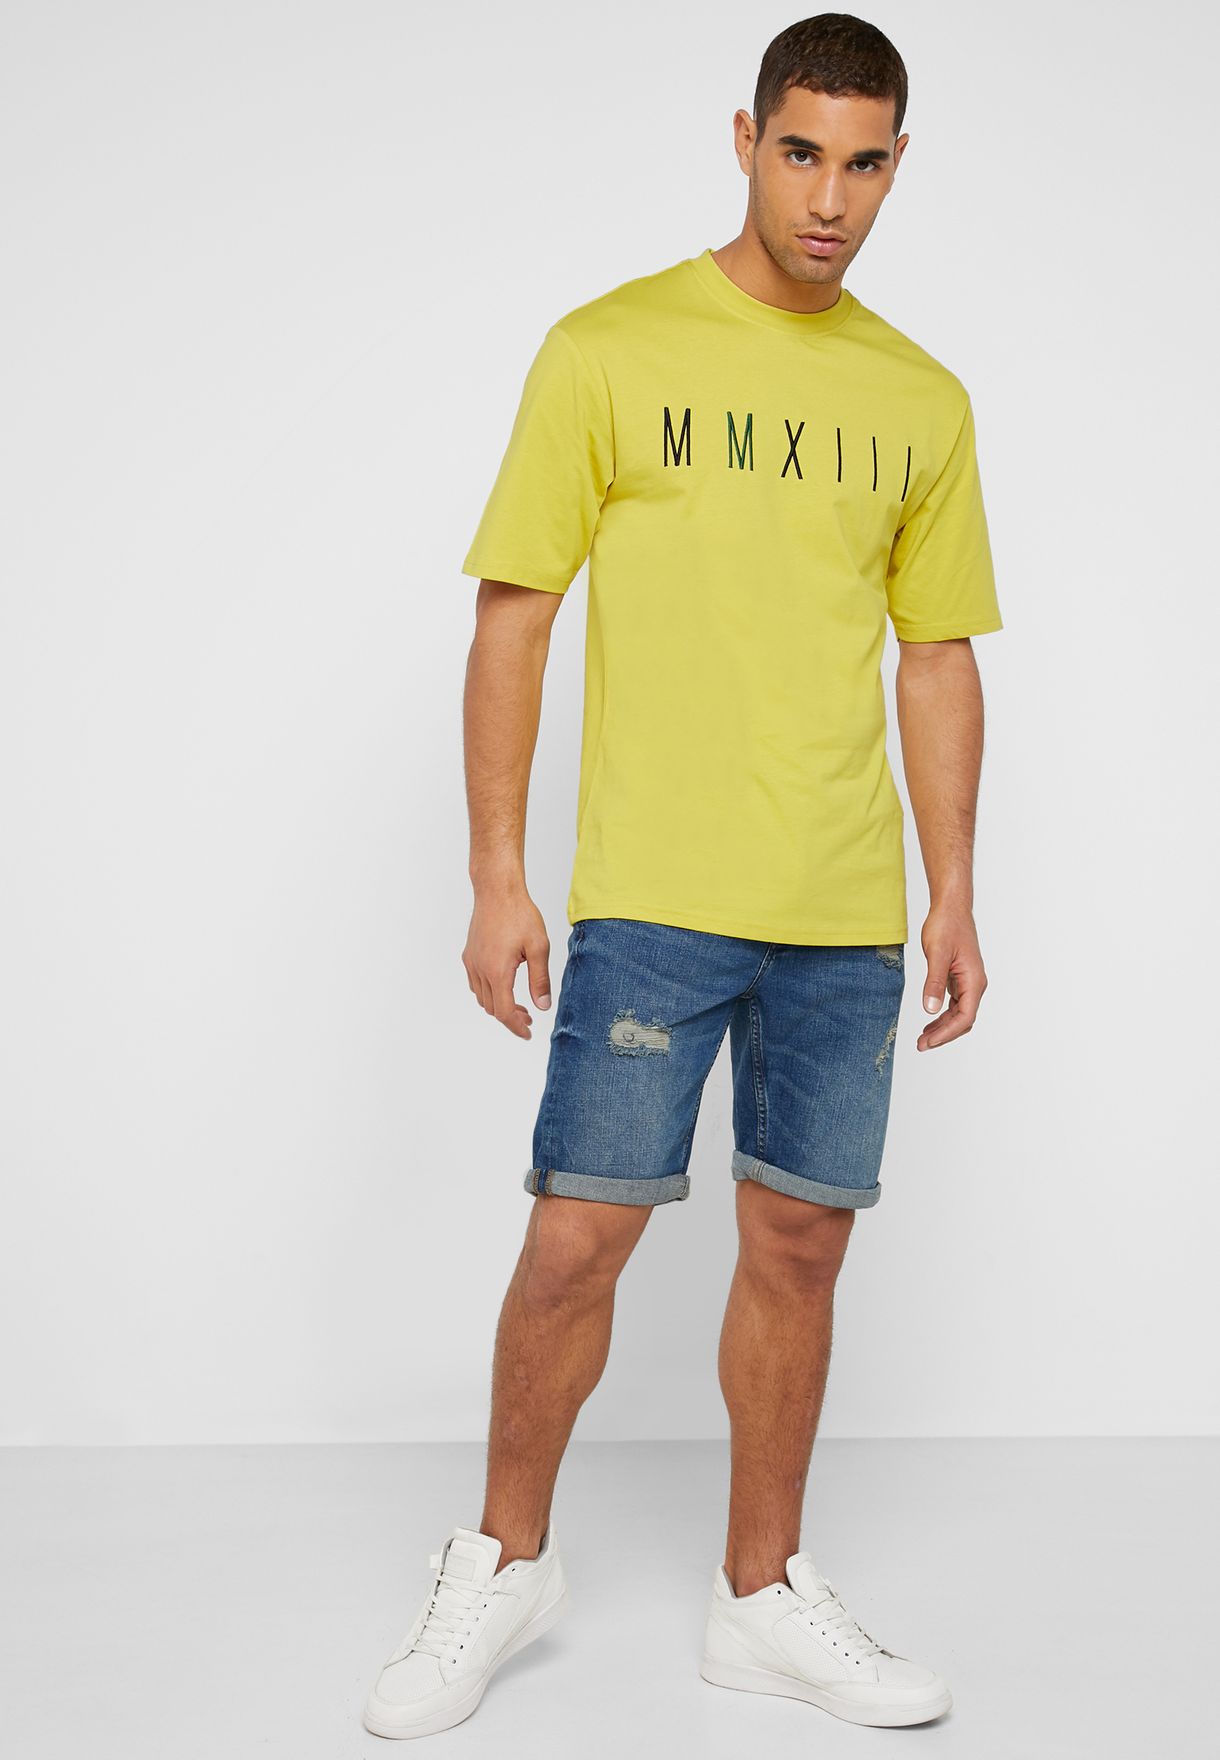 yellow jean shorts mens